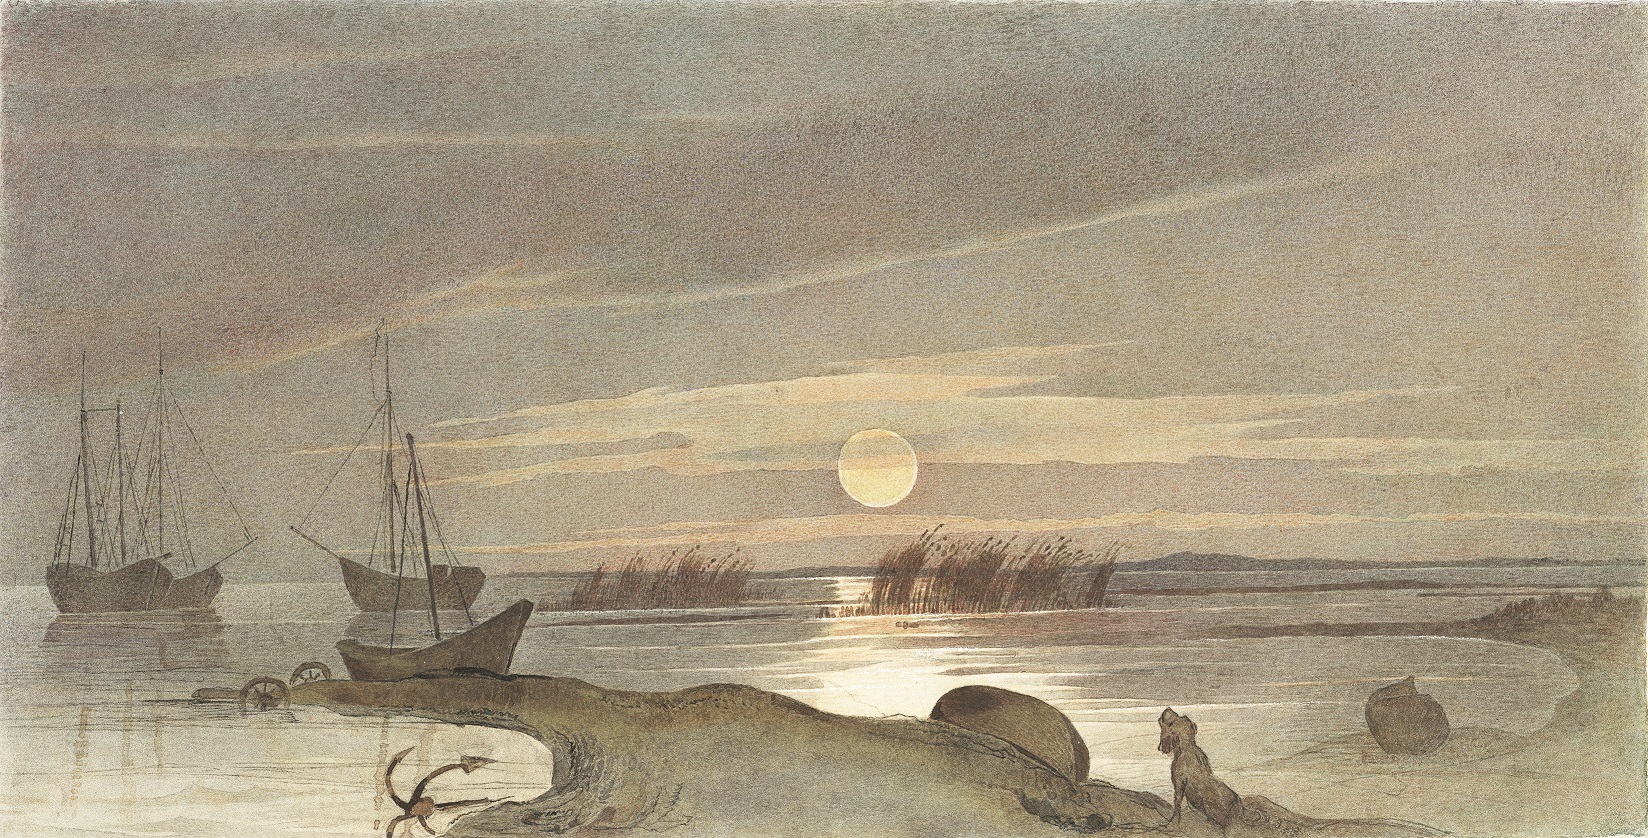 Moonlit Night in Kos-Aral, 1848-49, watercolour